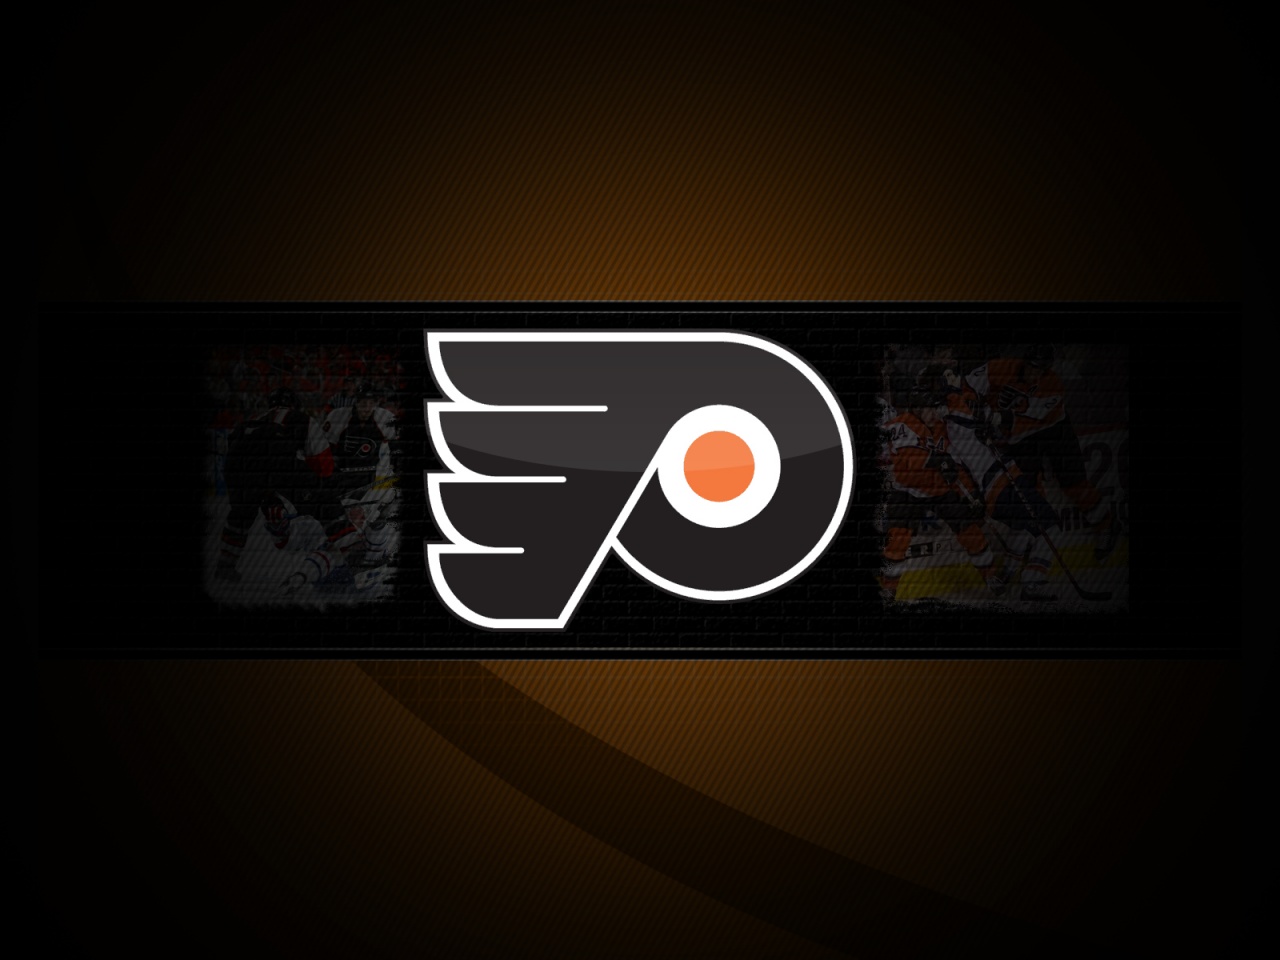 NHL: Philadelphia Flyers